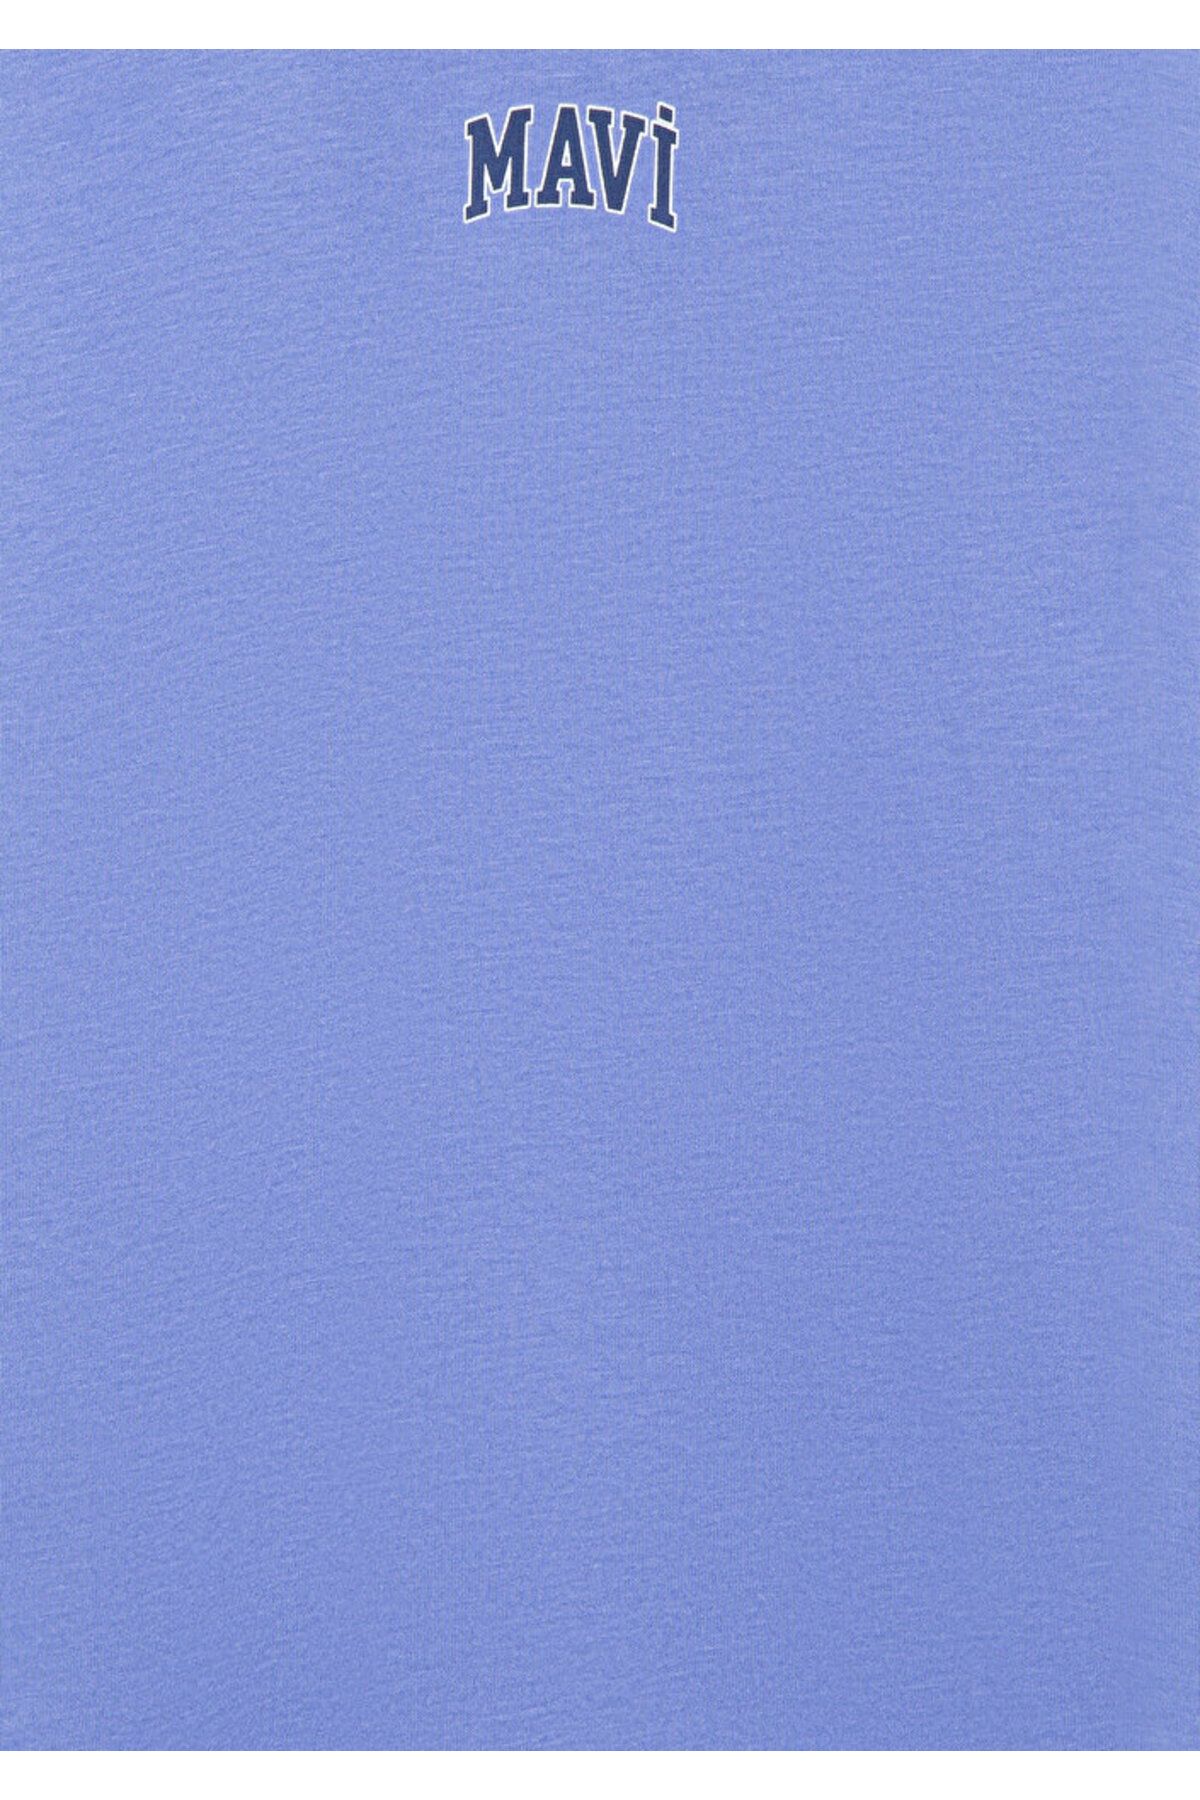 Mavi تی شرت آستین بلند یاسی چاپ شده با طرح معمولی / برش 7610120-70558